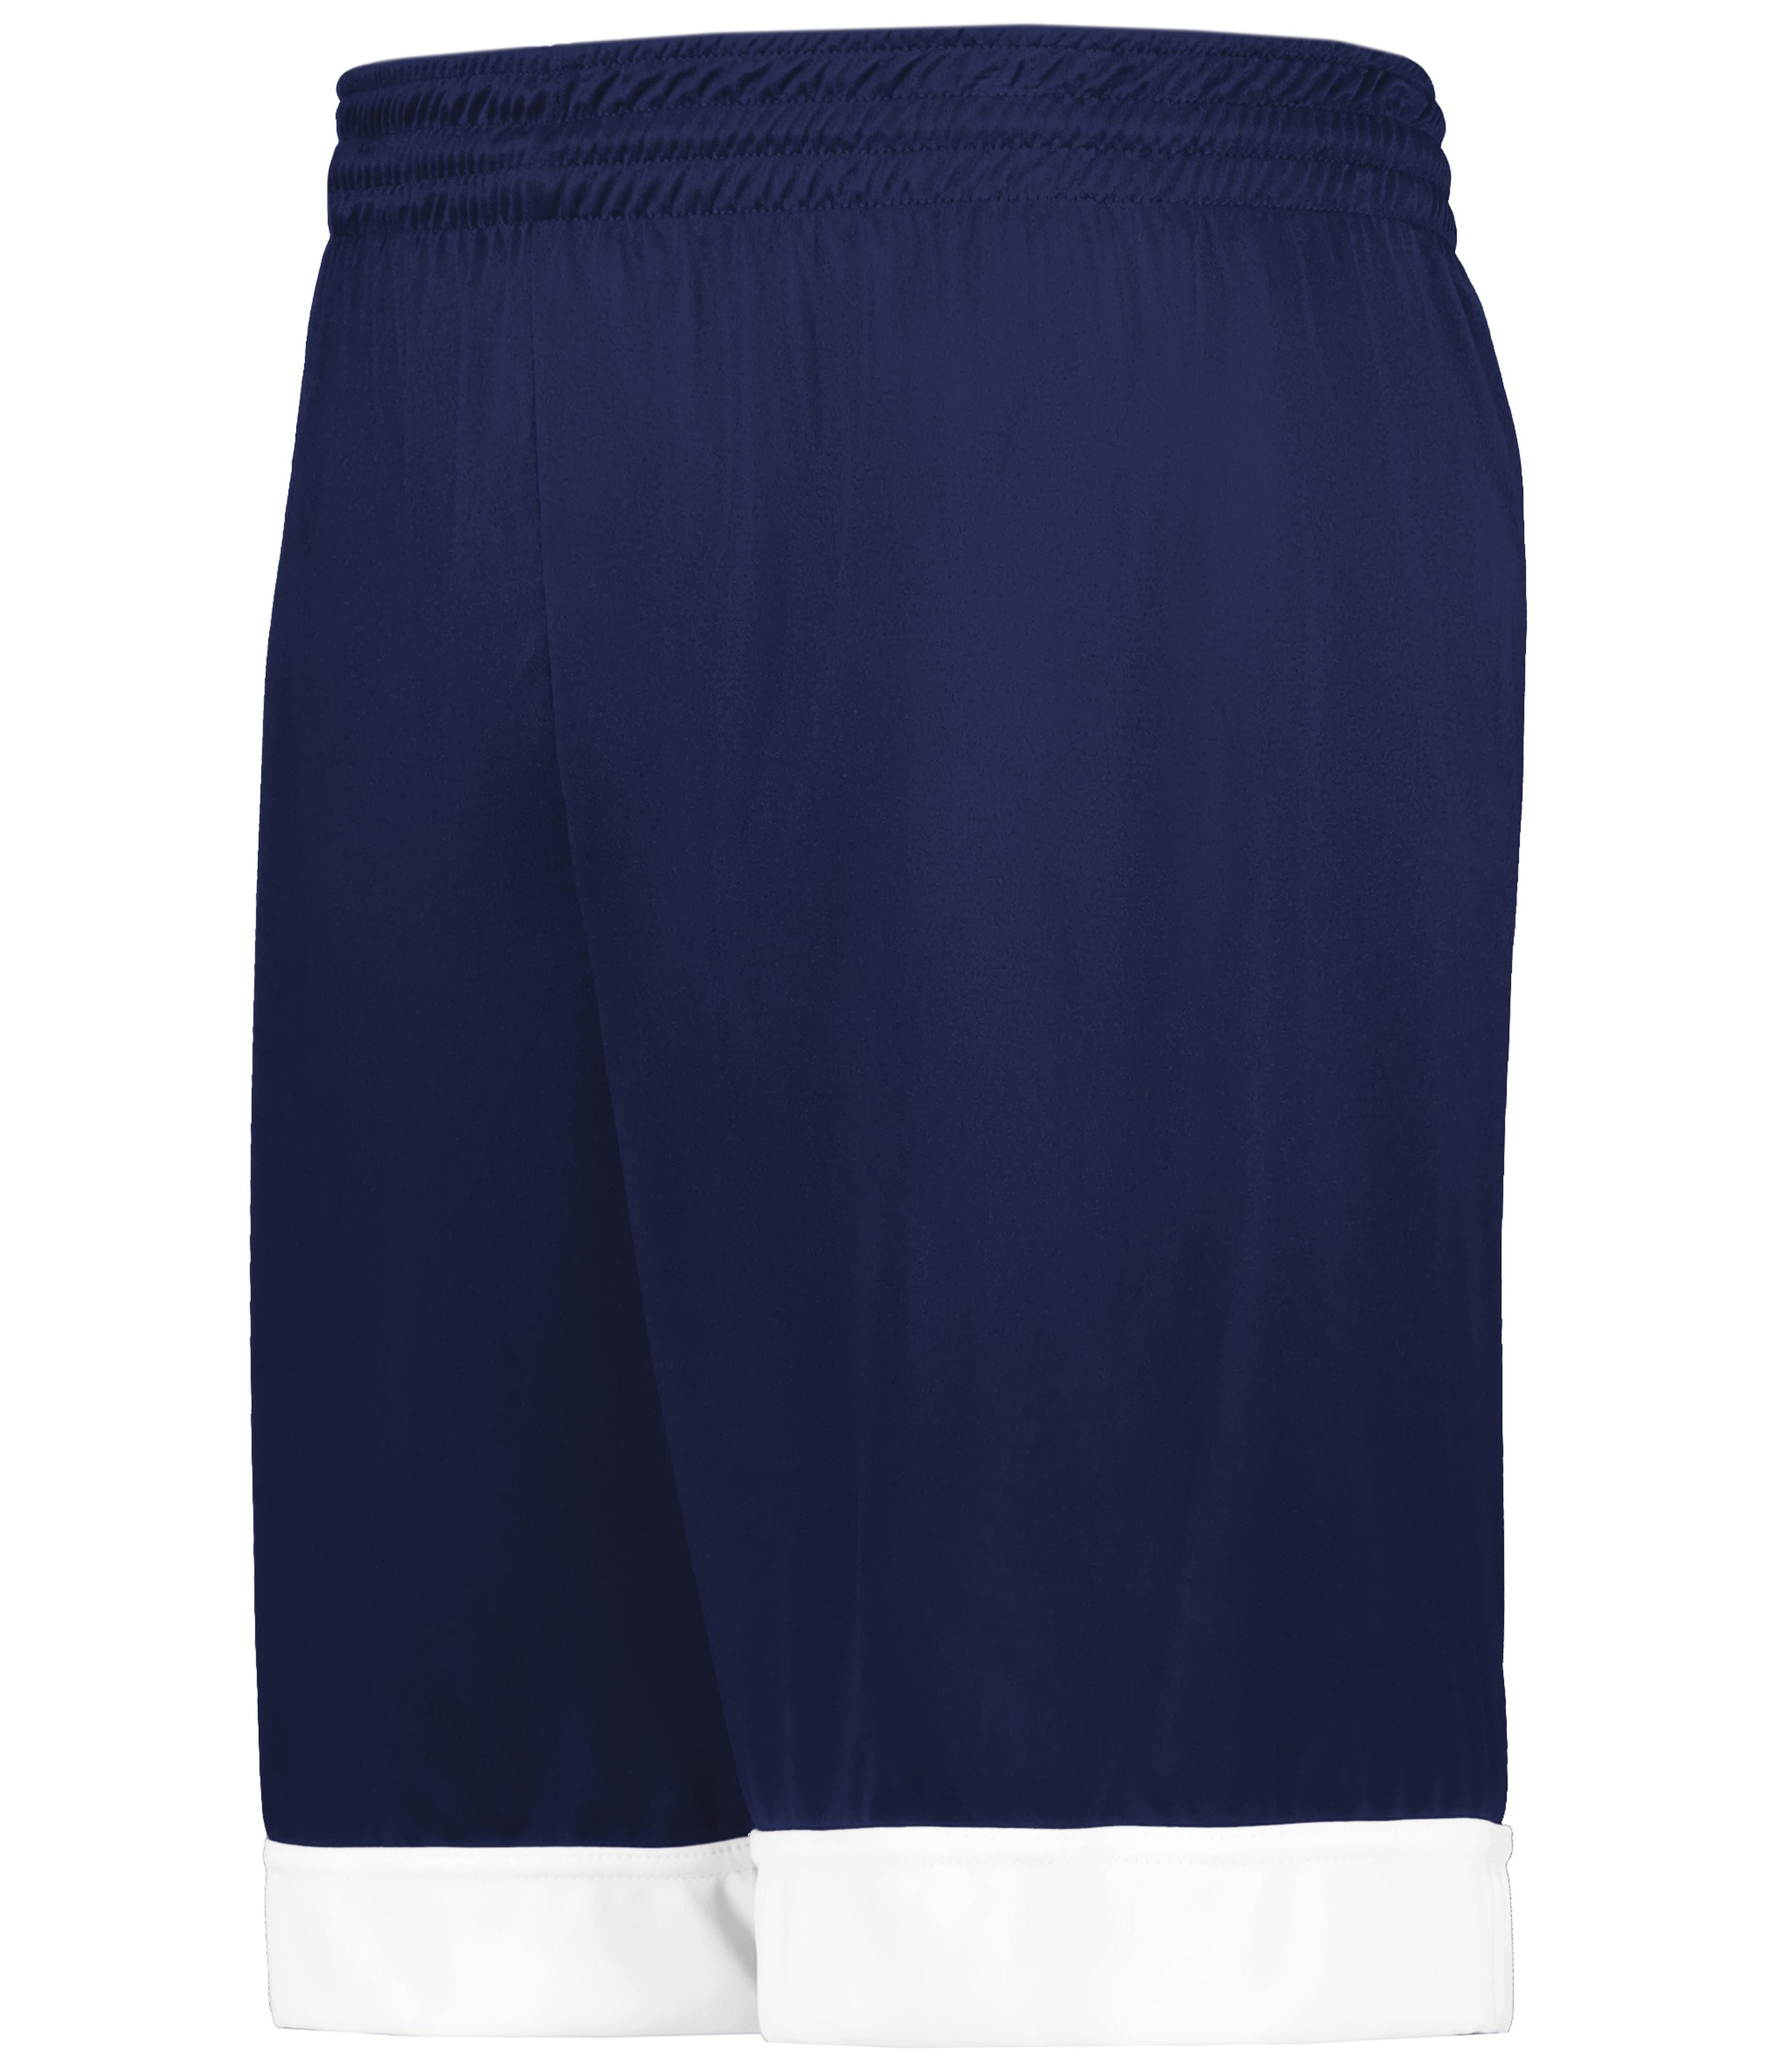 Men's YoungLA 130 Essential Basketball Shorts Royal Blue Size Medium (NEW)